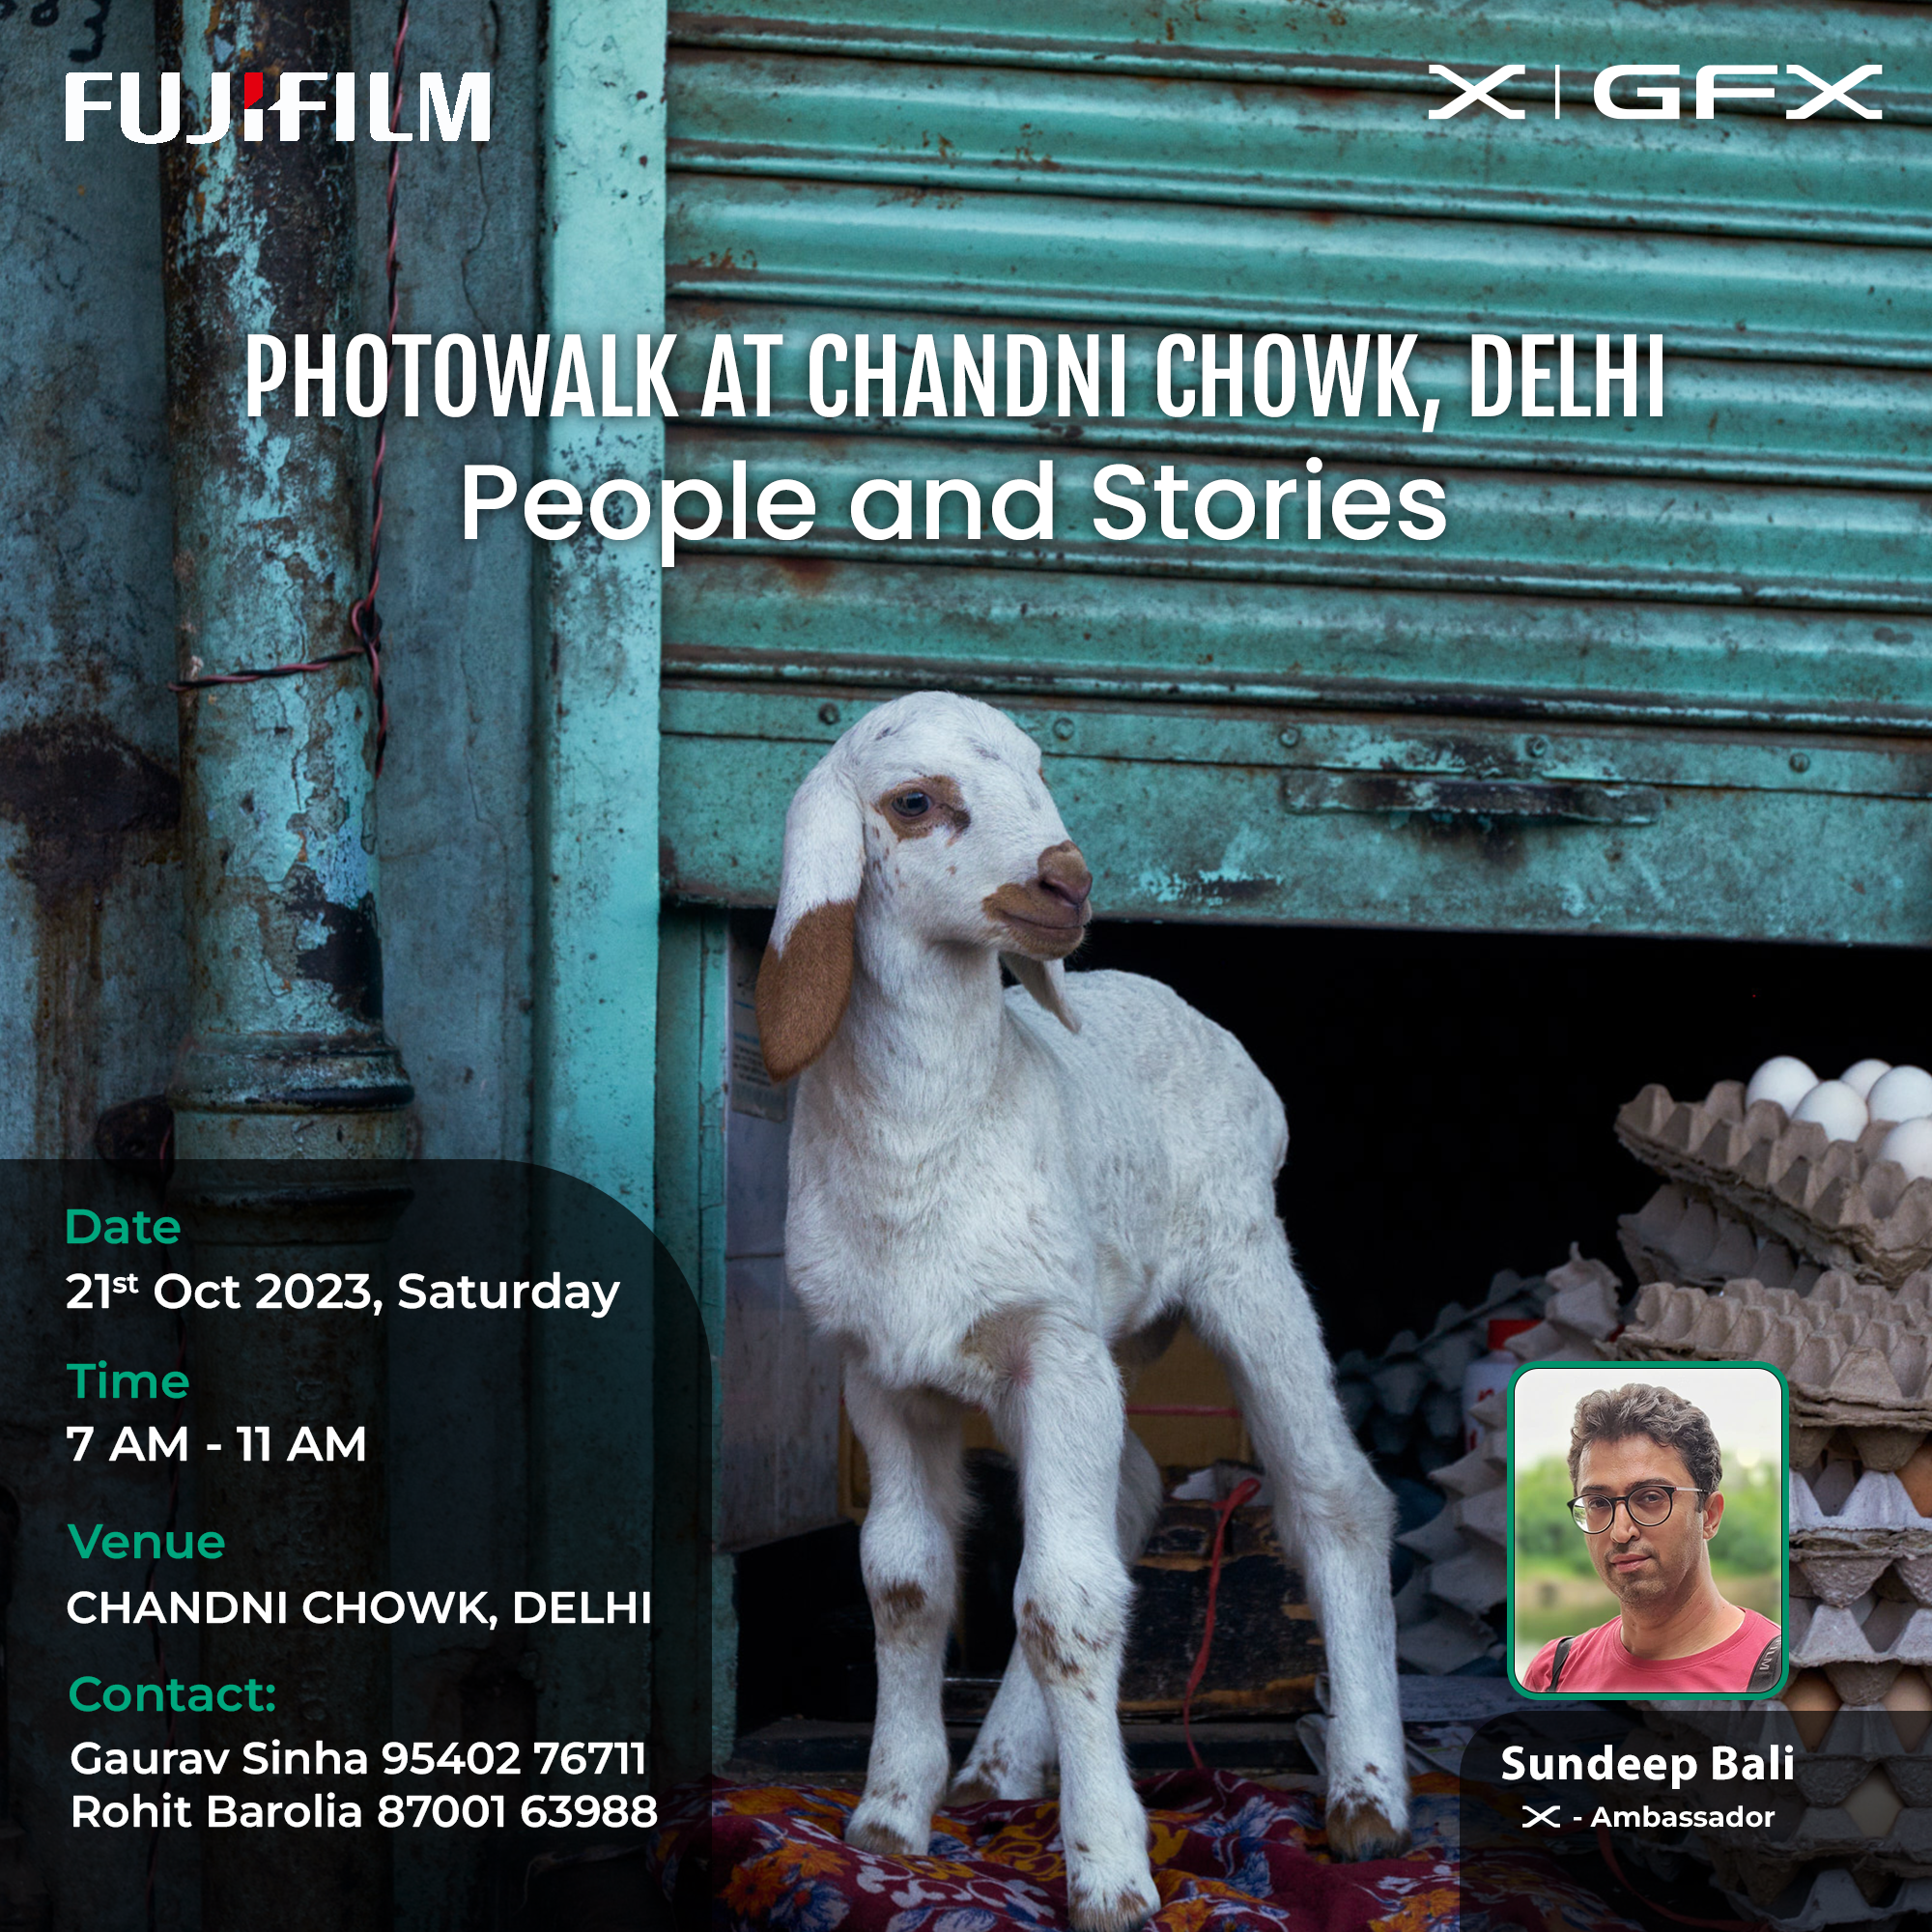 Photowalk at Chandni Chowk, Delhi